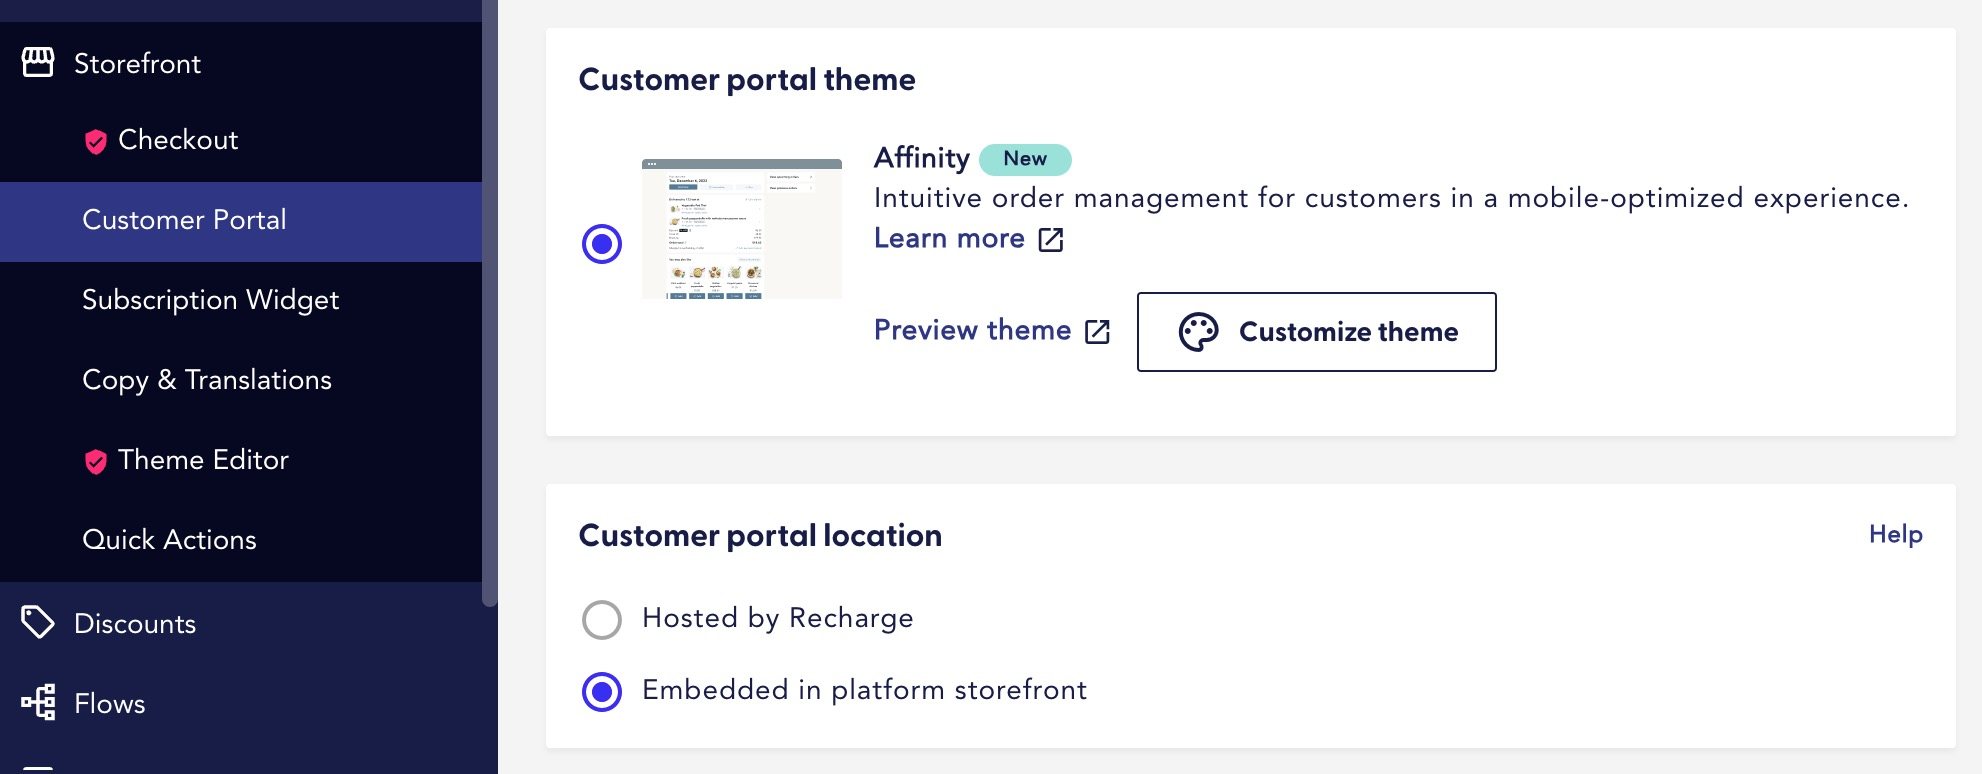 Customer portal theme